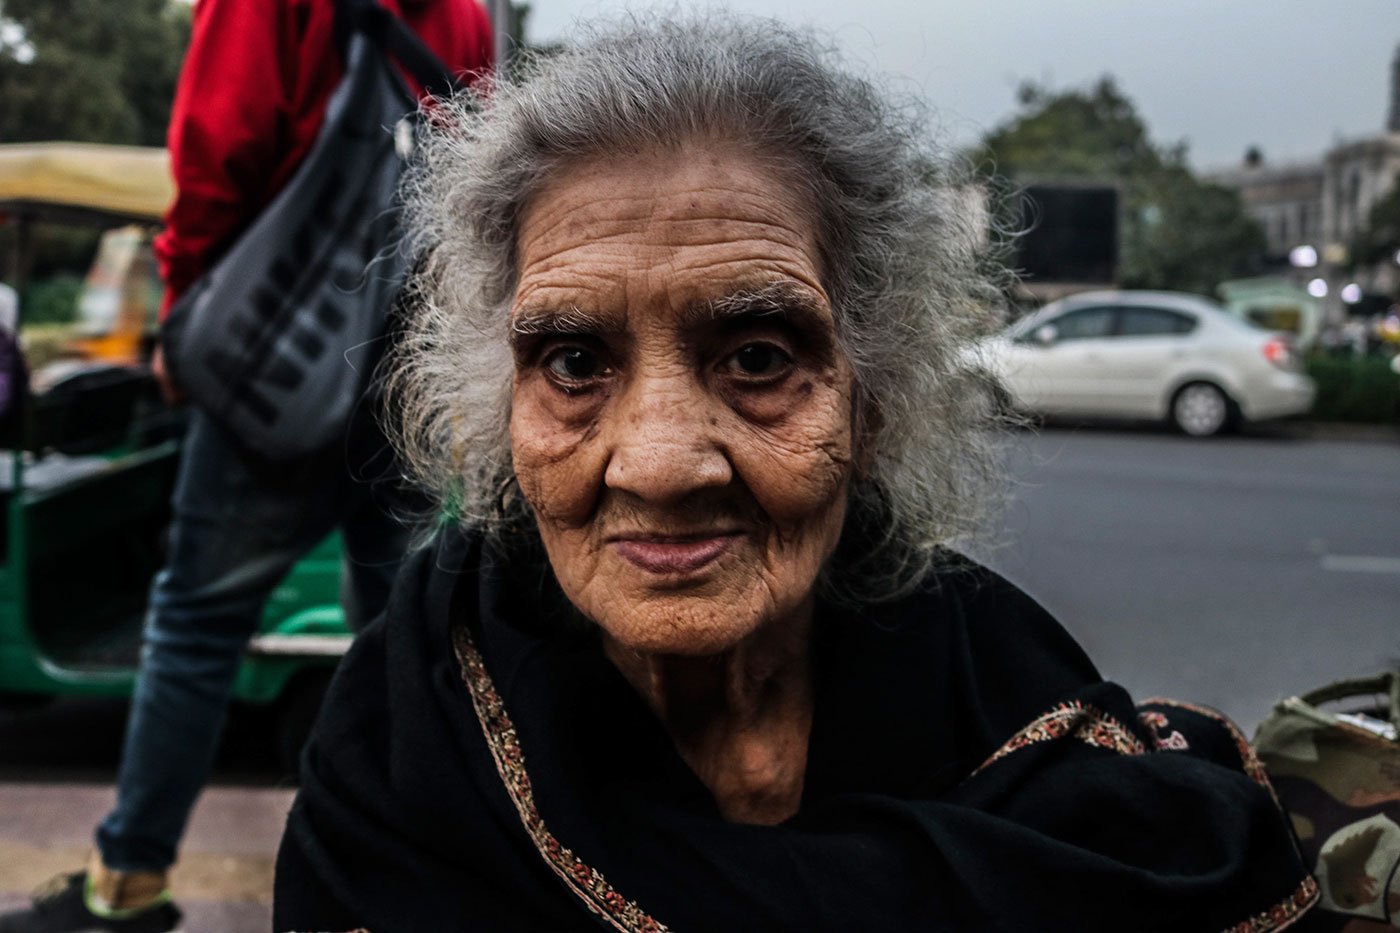 80-year-old homemaker